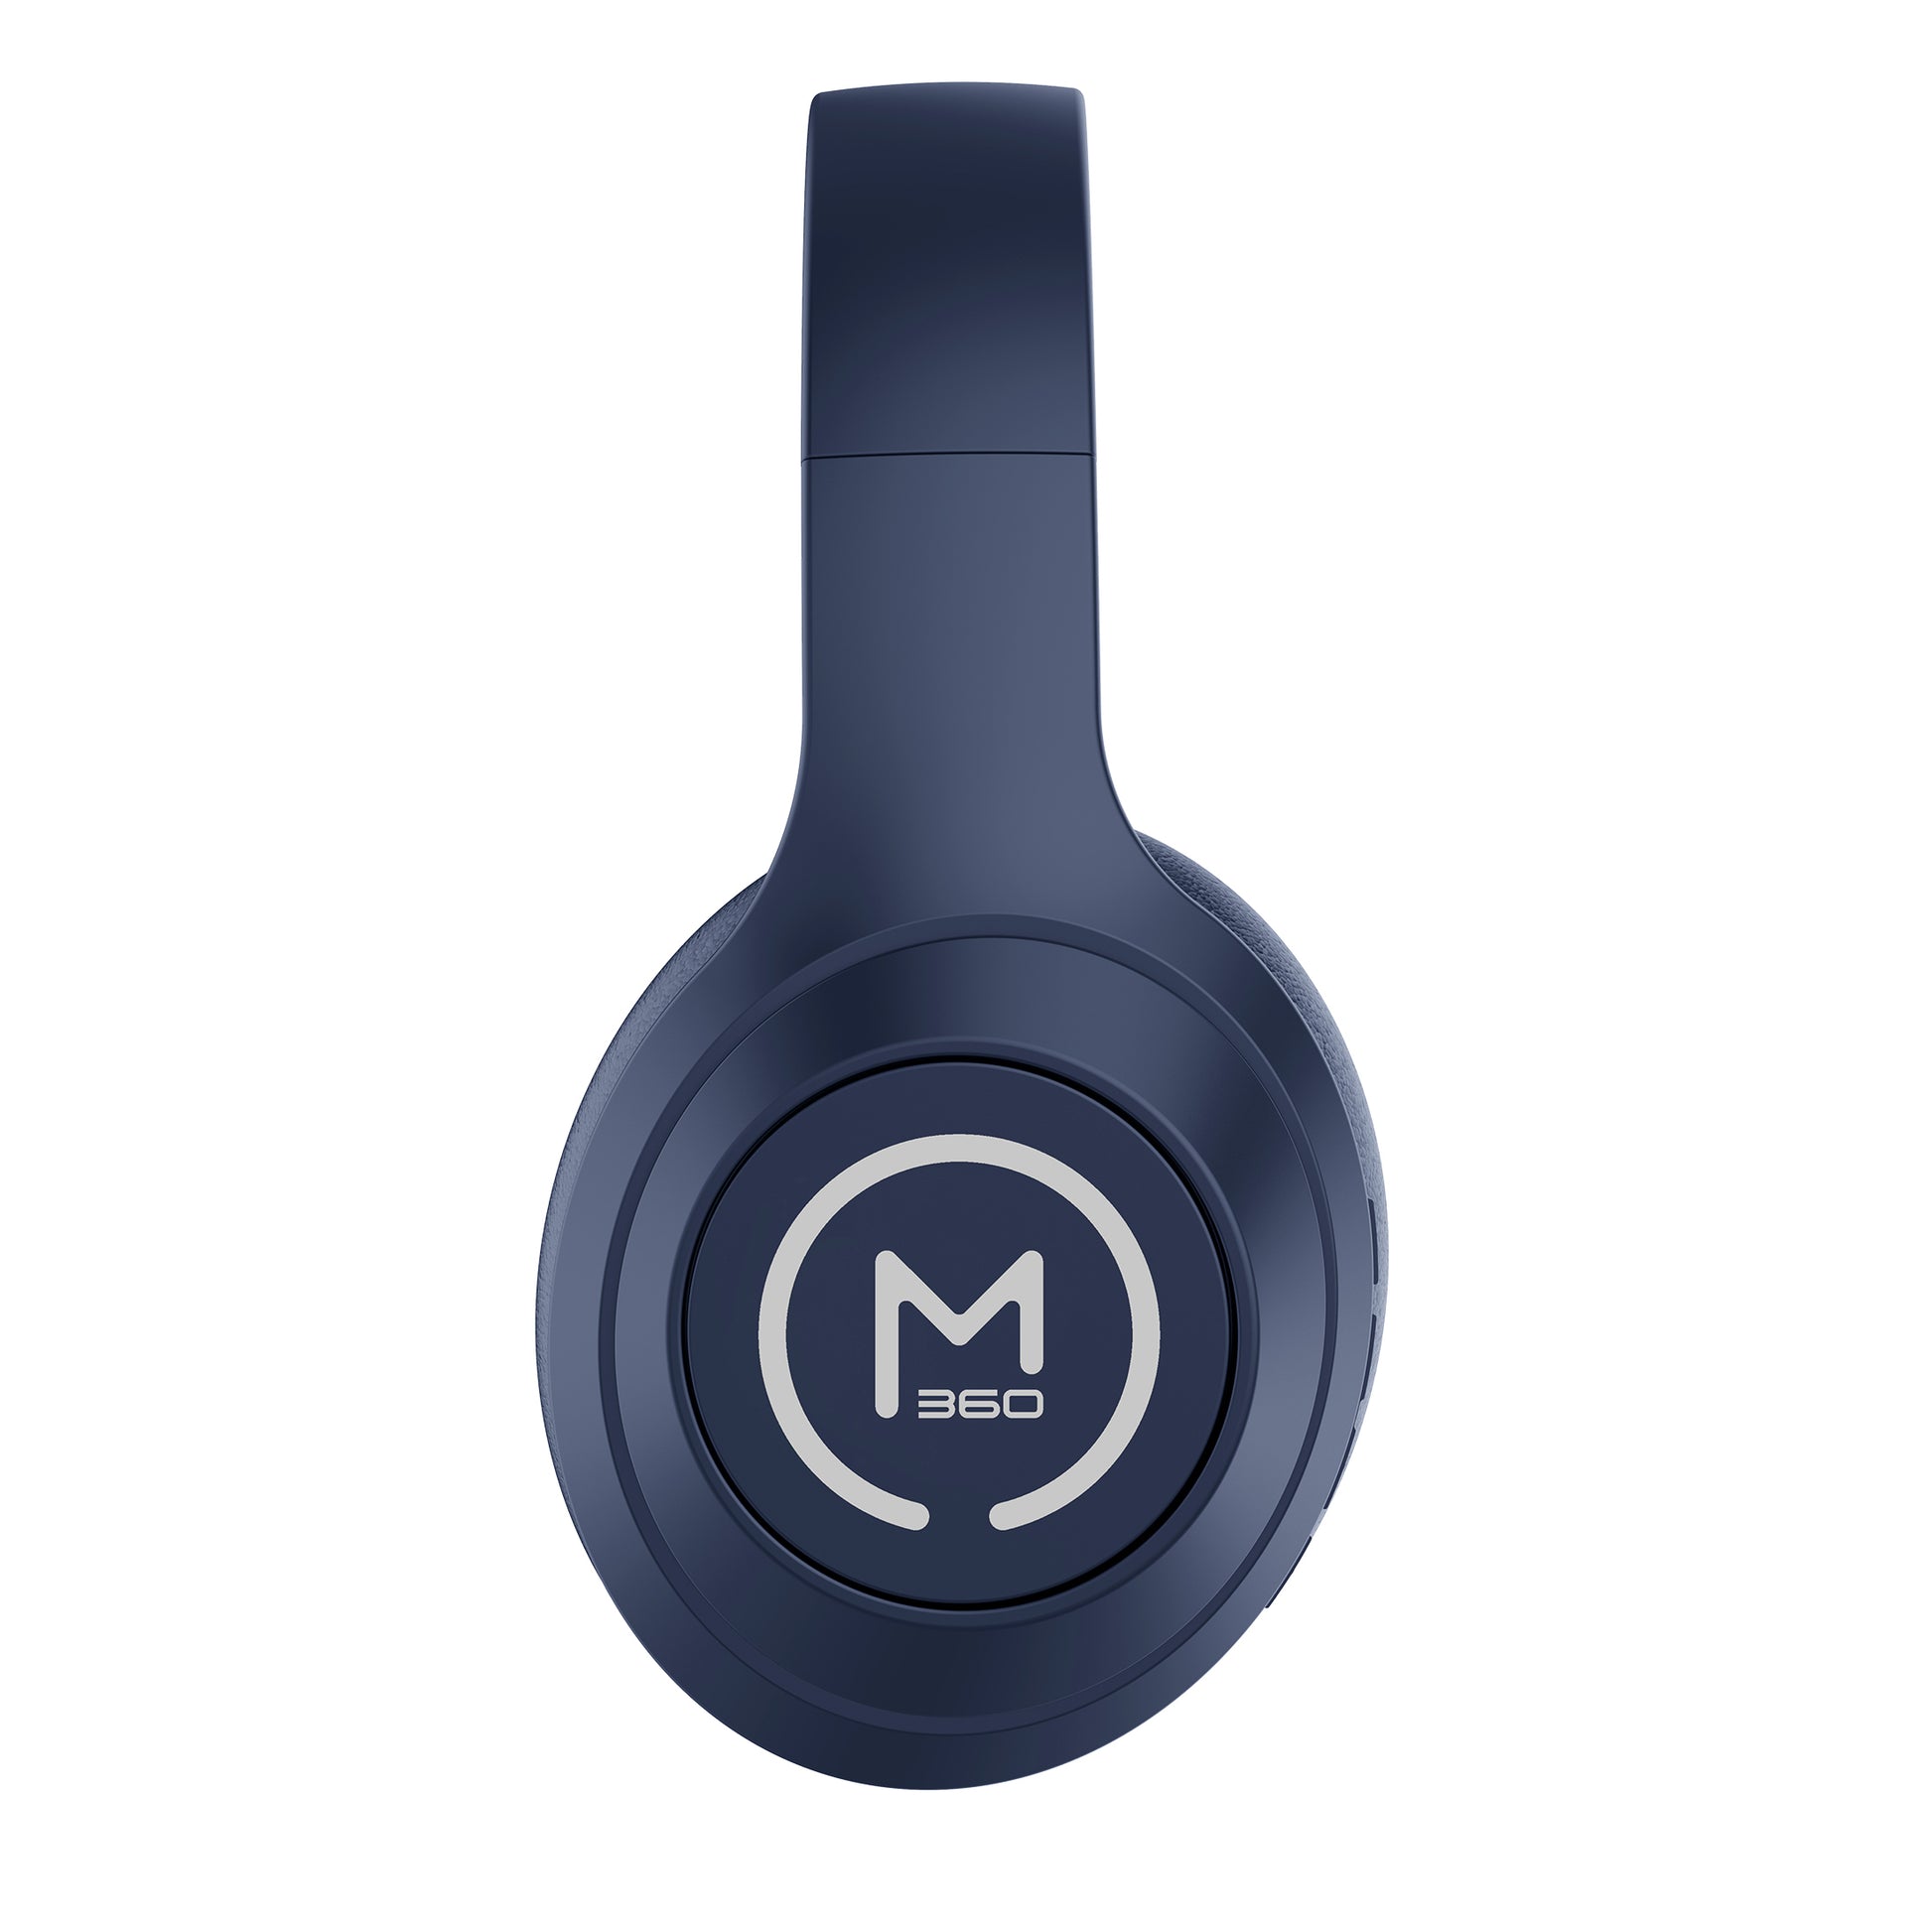 Morpheus 360 Advantage Stereo Wireless Headset with Detachable